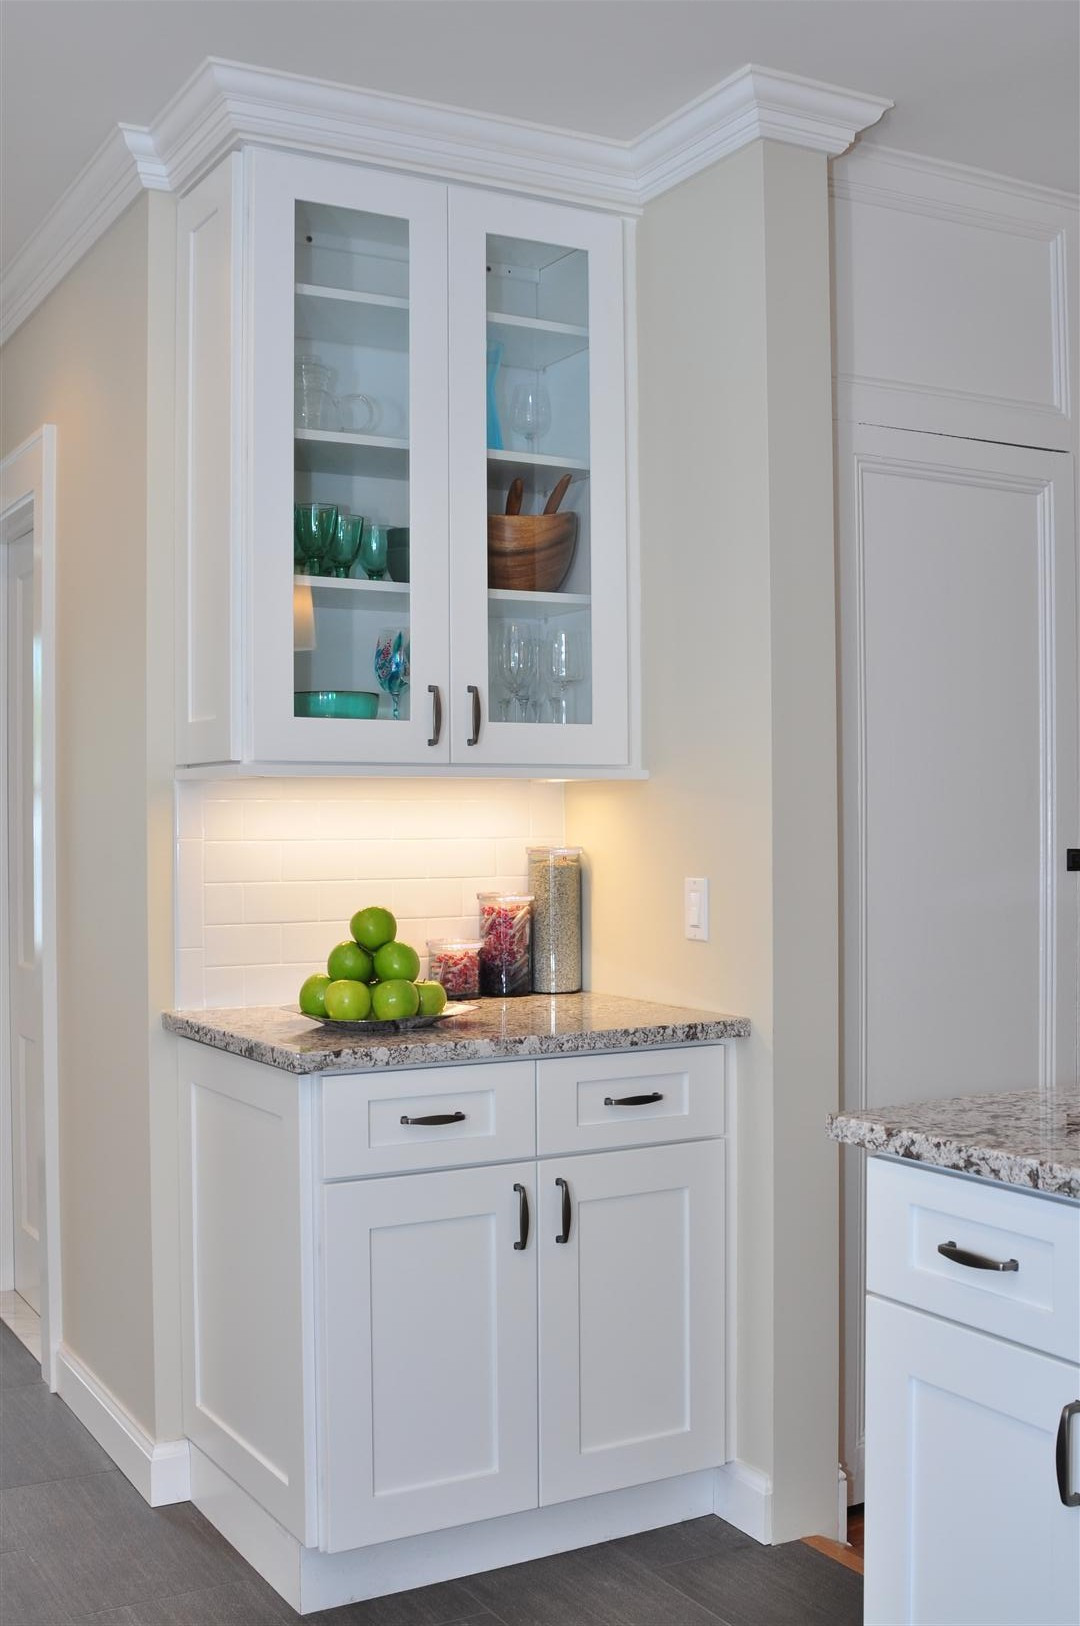 White Kitchen Cabinet Handles
 Aspen White Shaker Ready To Assemble Kitchen Cabinets